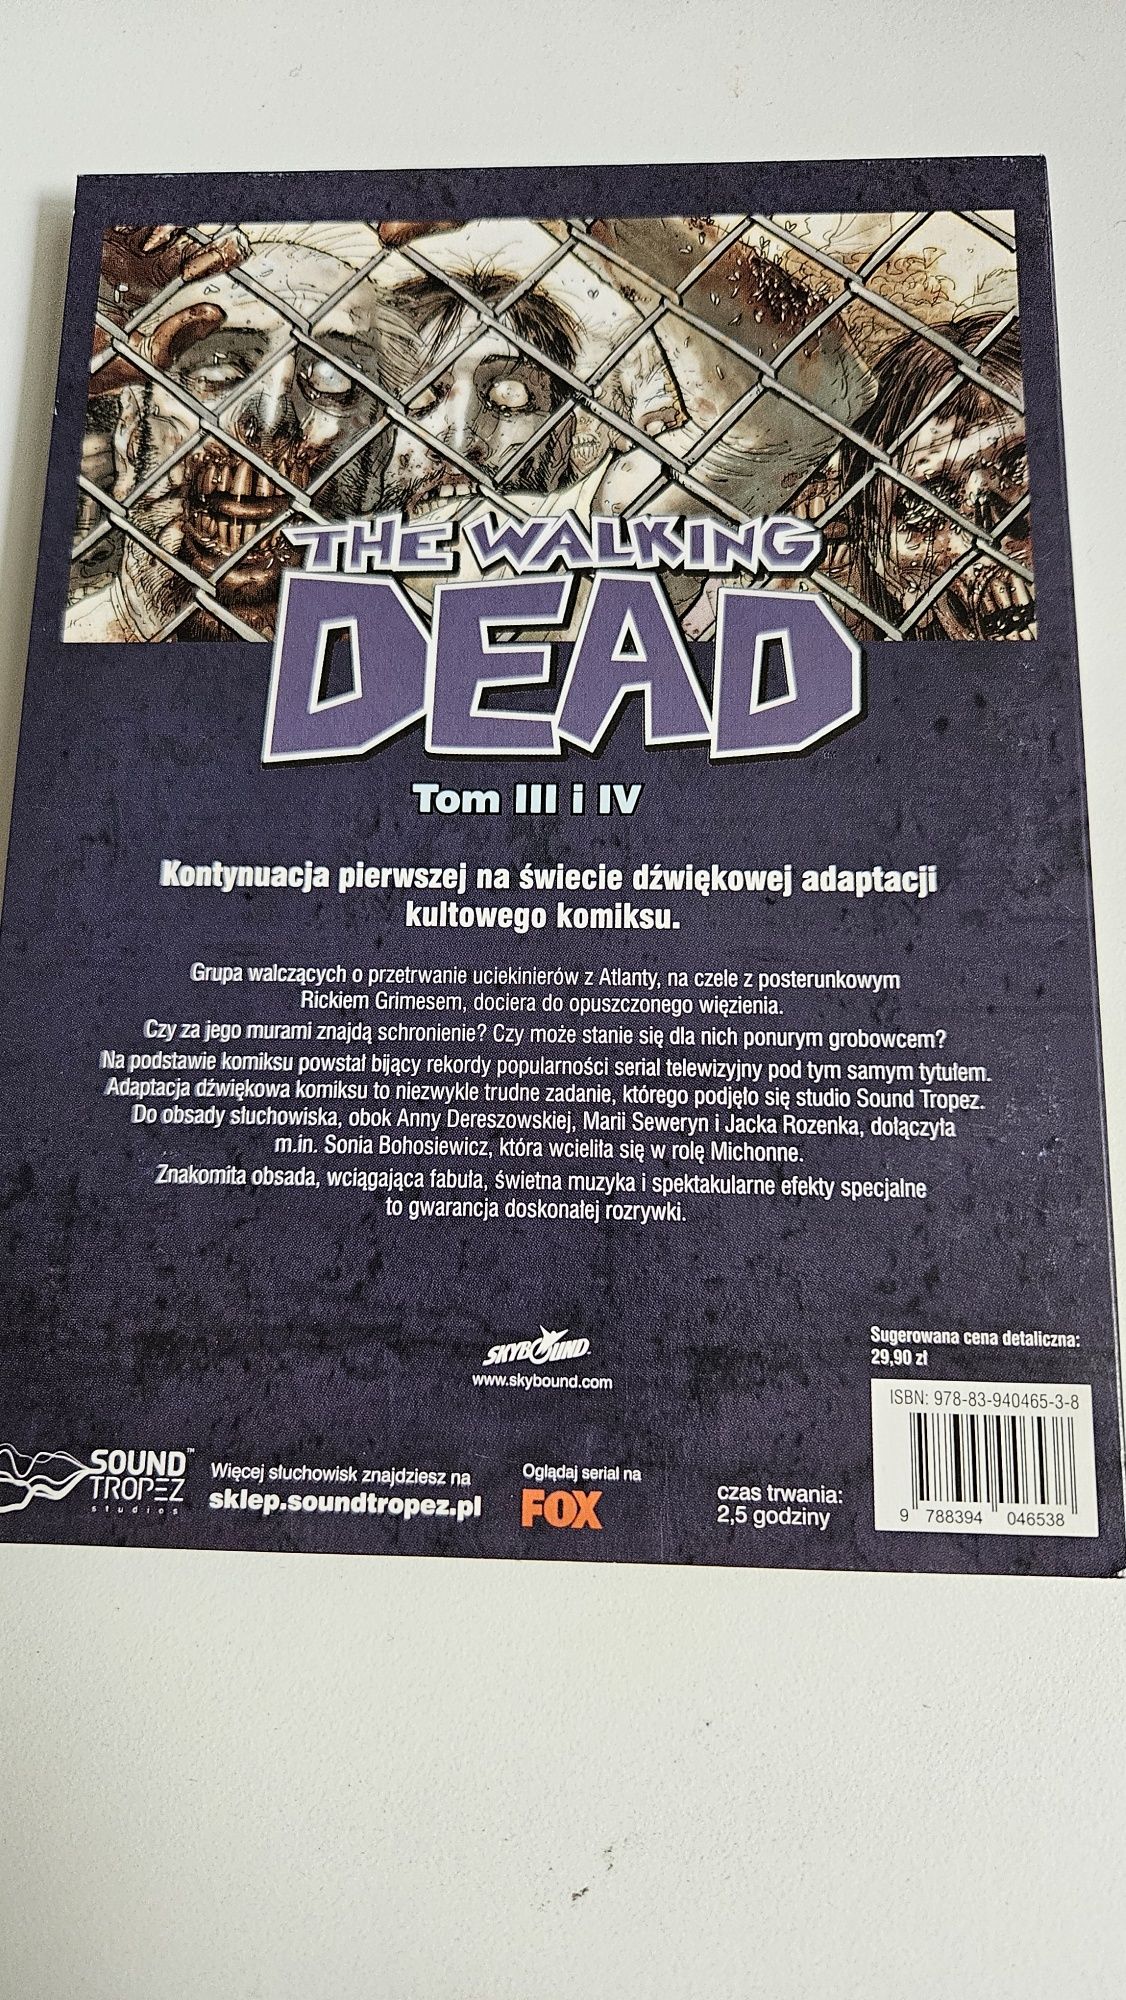 The Walking Dead Tom III i IV Adiobook CD MP3